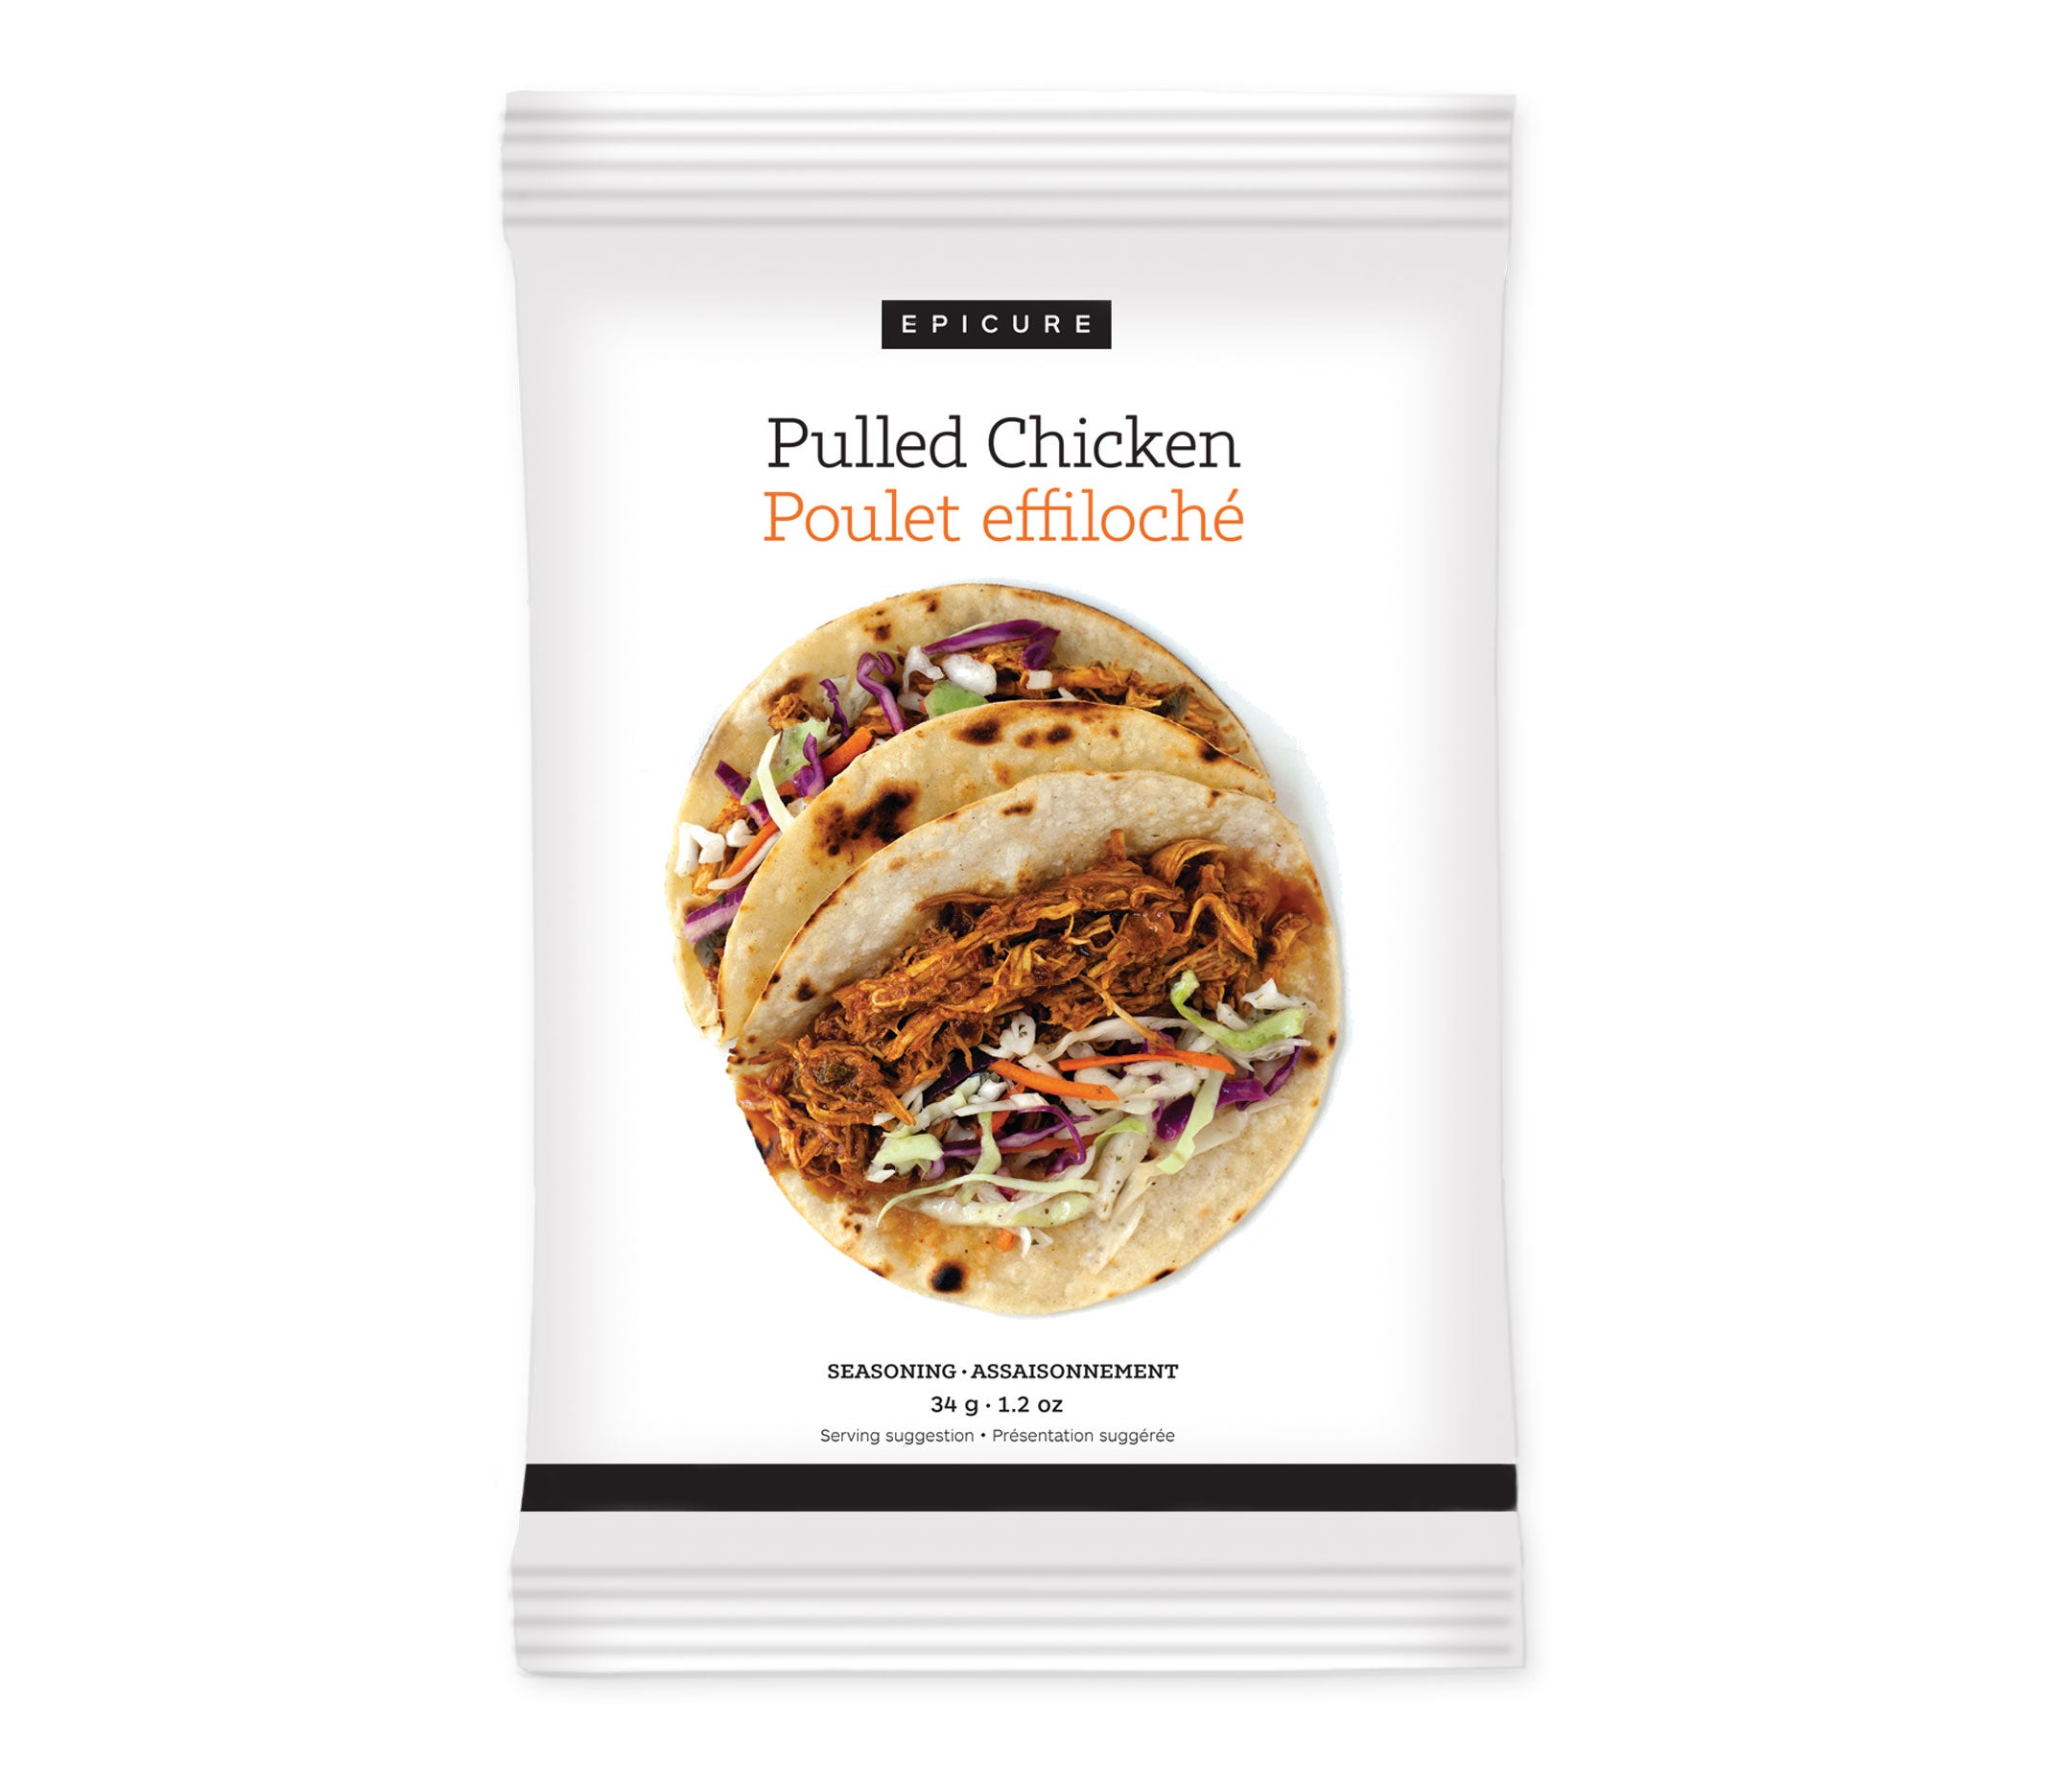 Pulled Chicken Seasoning (Pack of 3)